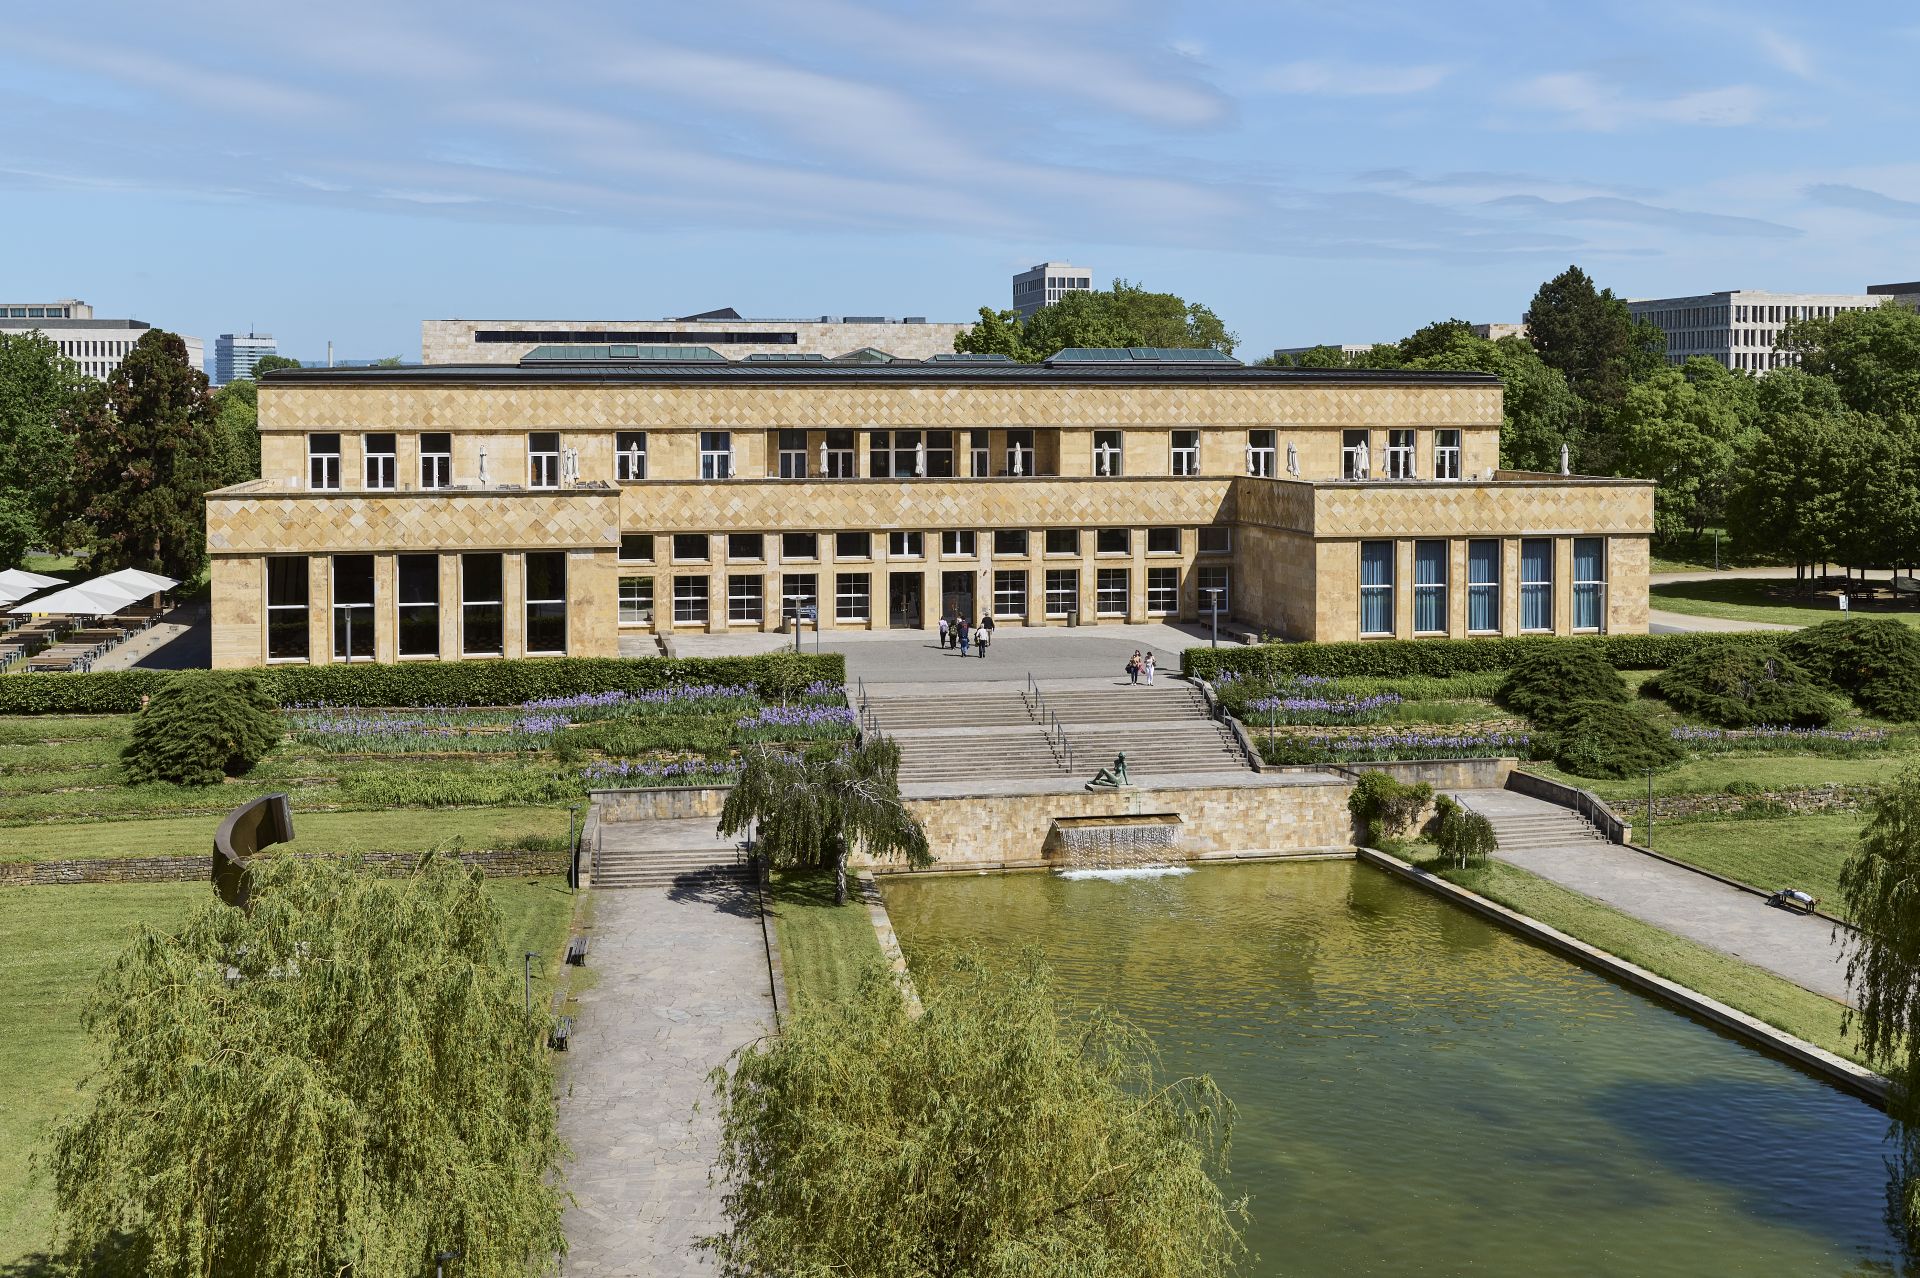 Location Goethe-Universität Frankfurt, Campus Westend